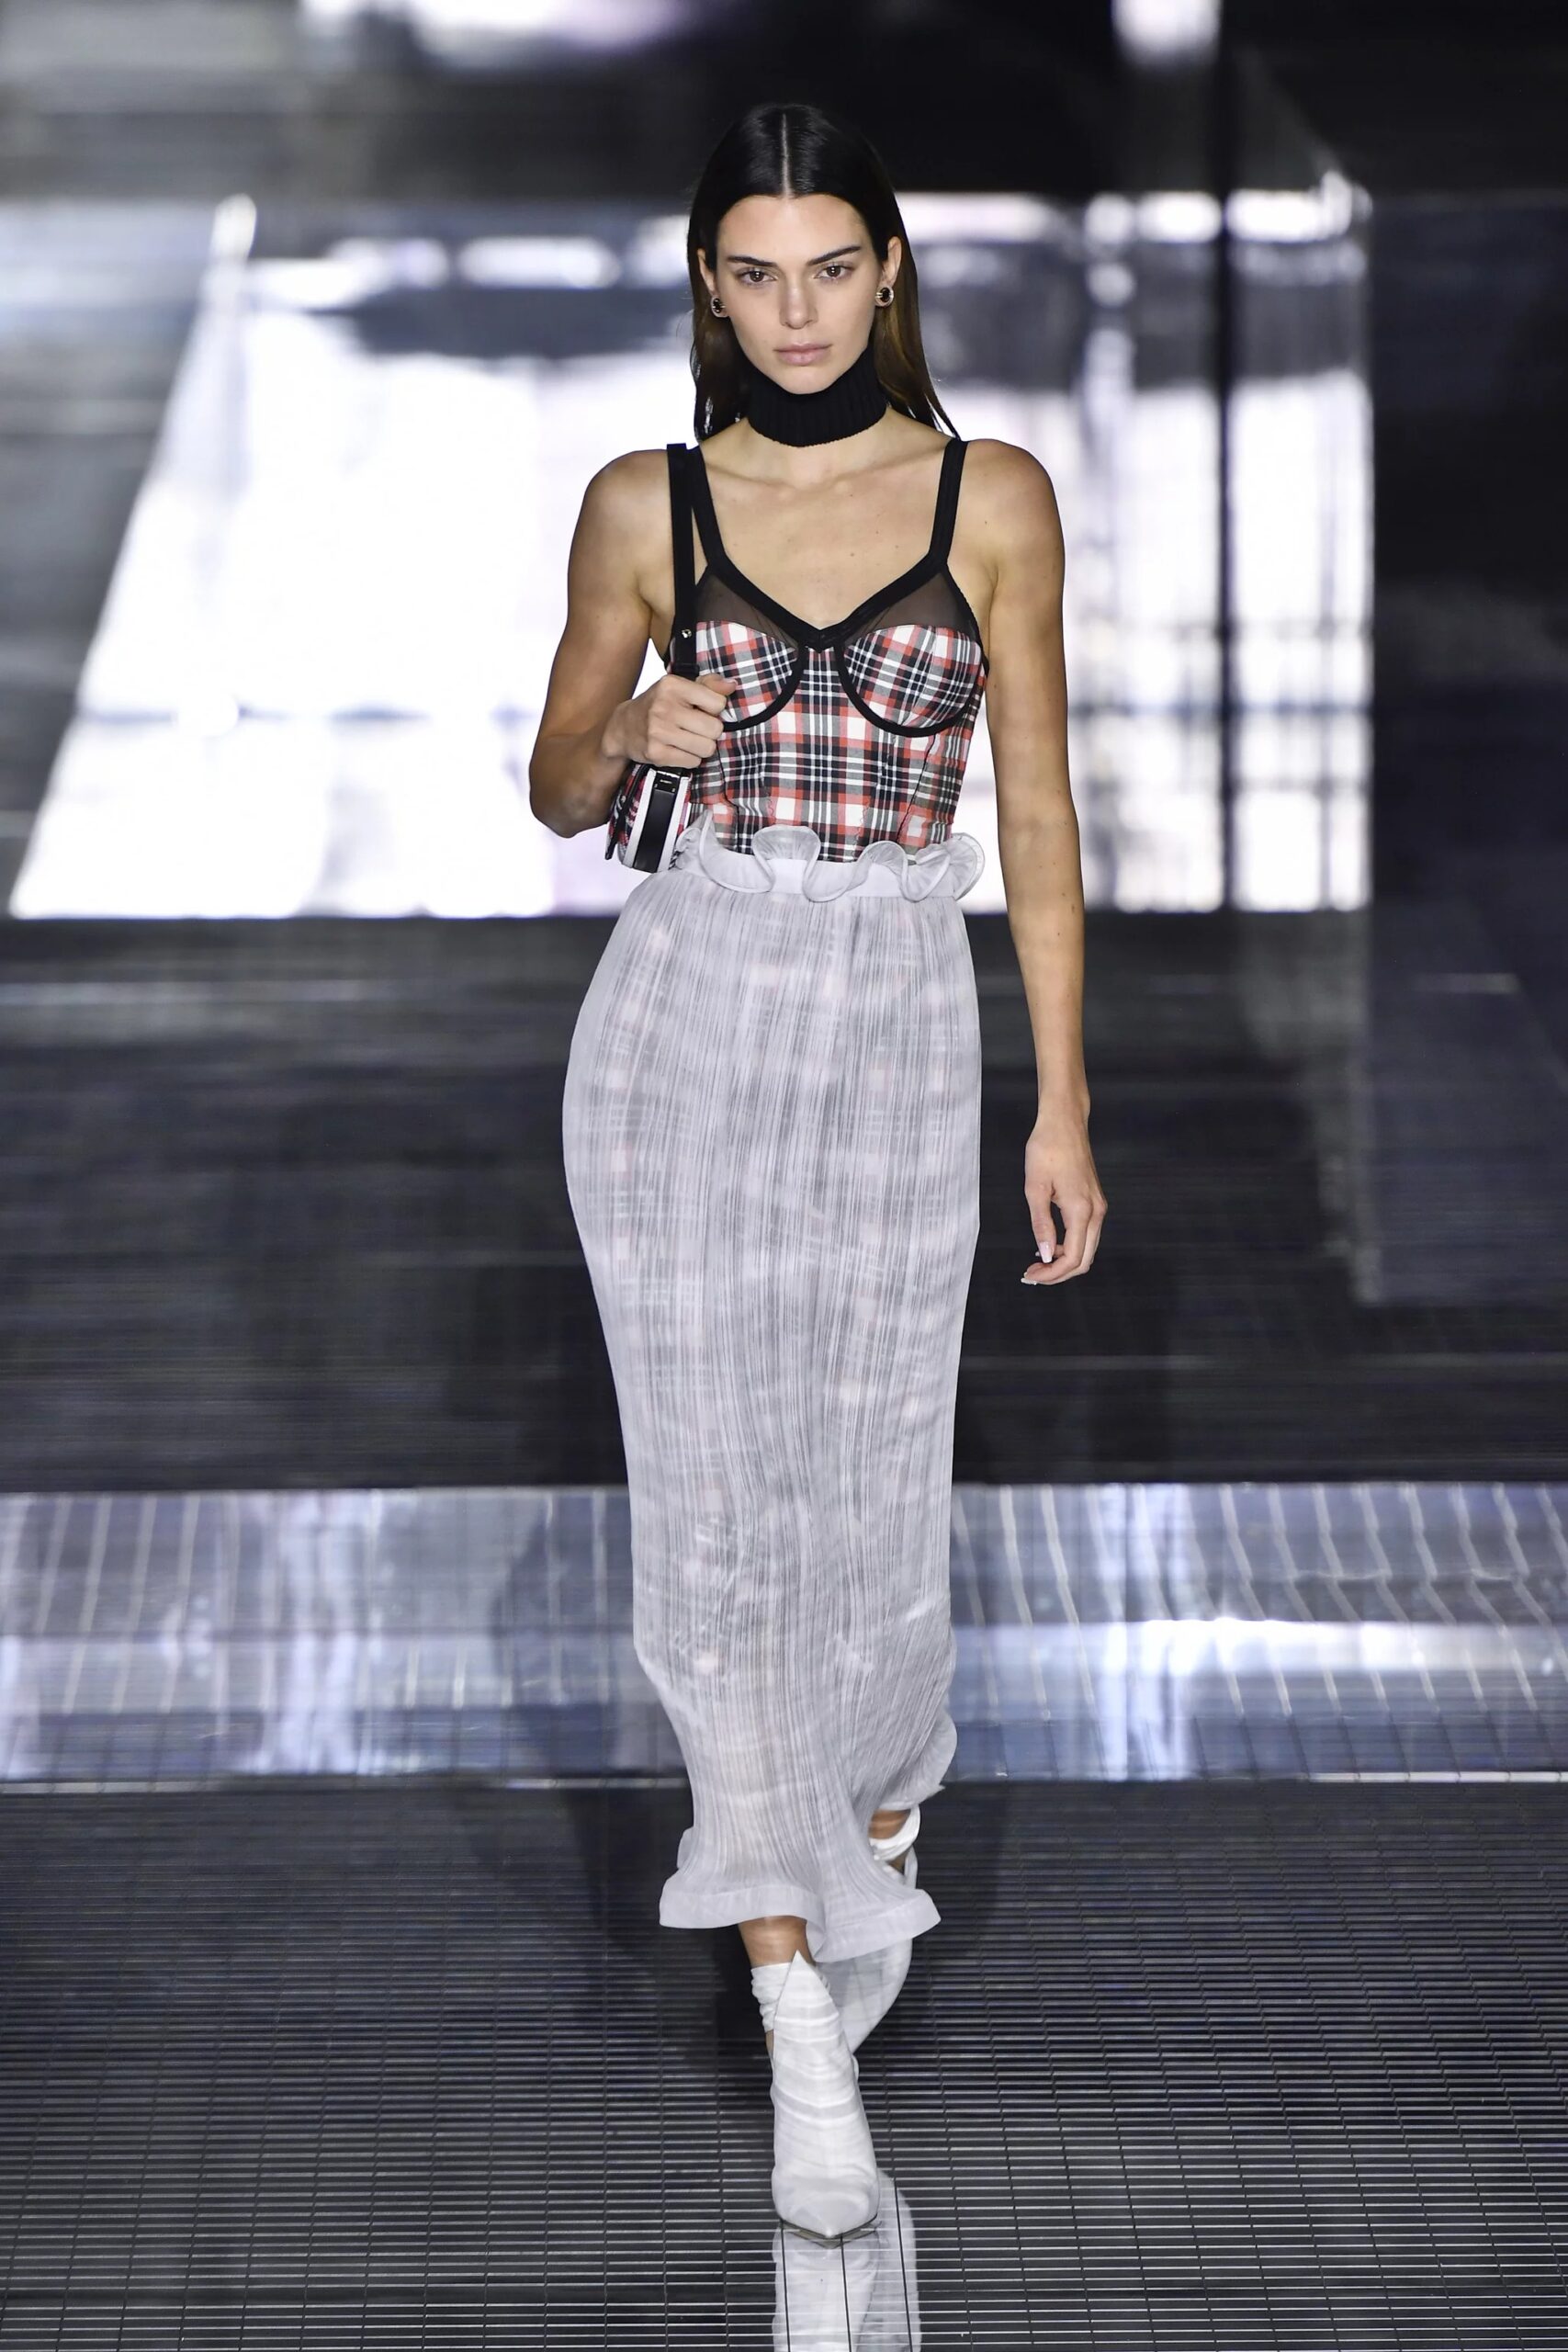 Kendall Jenner walks at the 2020 London Fashion Week